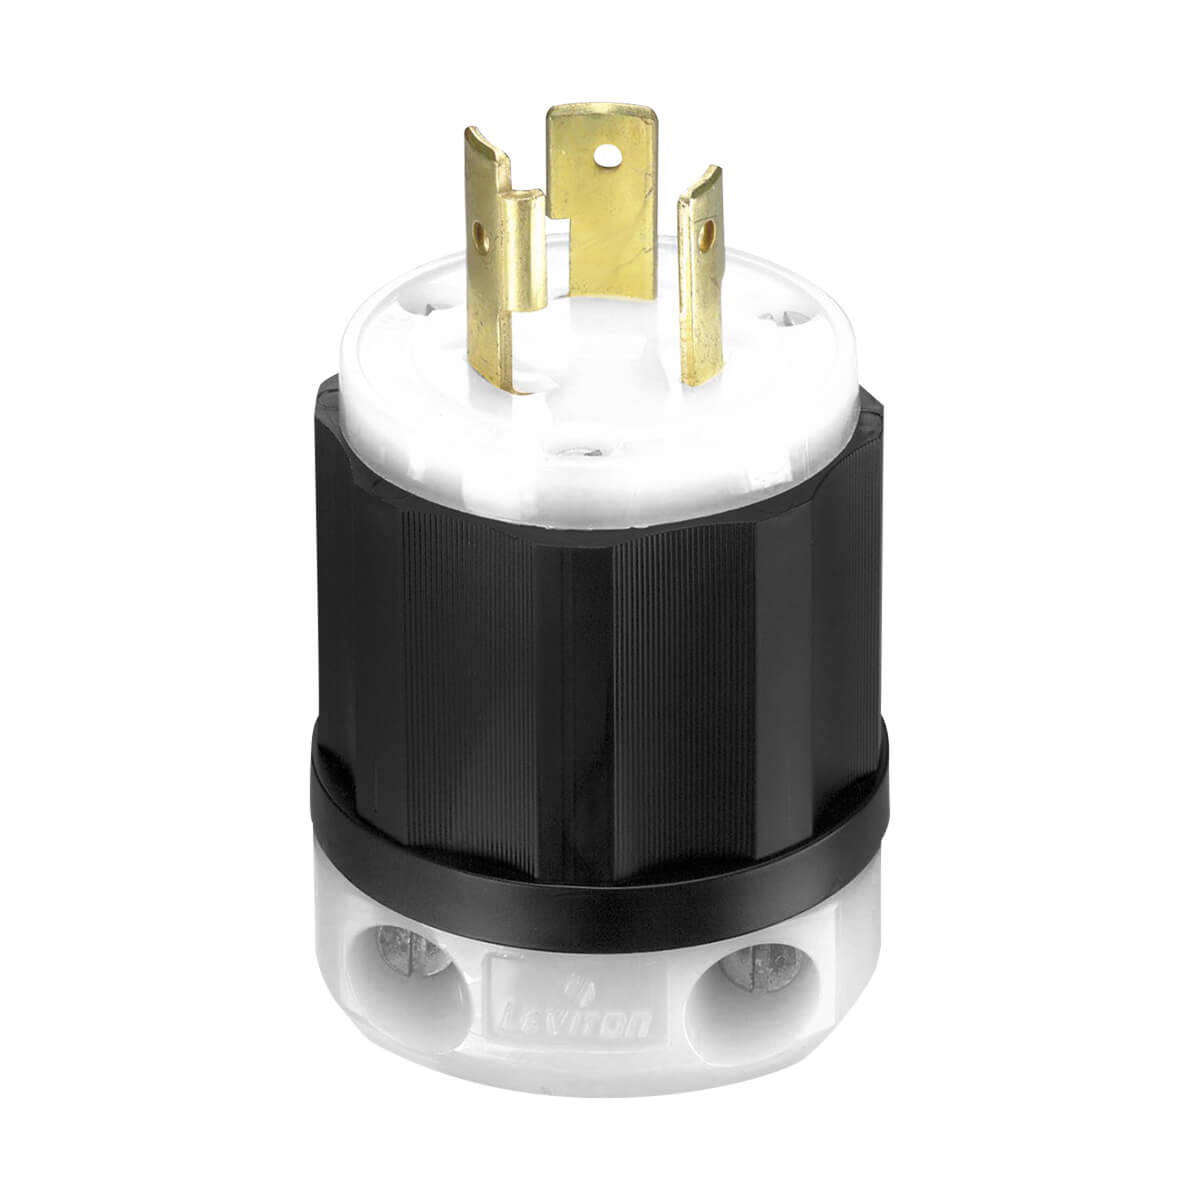 20A 125V 2P 3W Locking Plug Industrial Grade Grounding Black/White